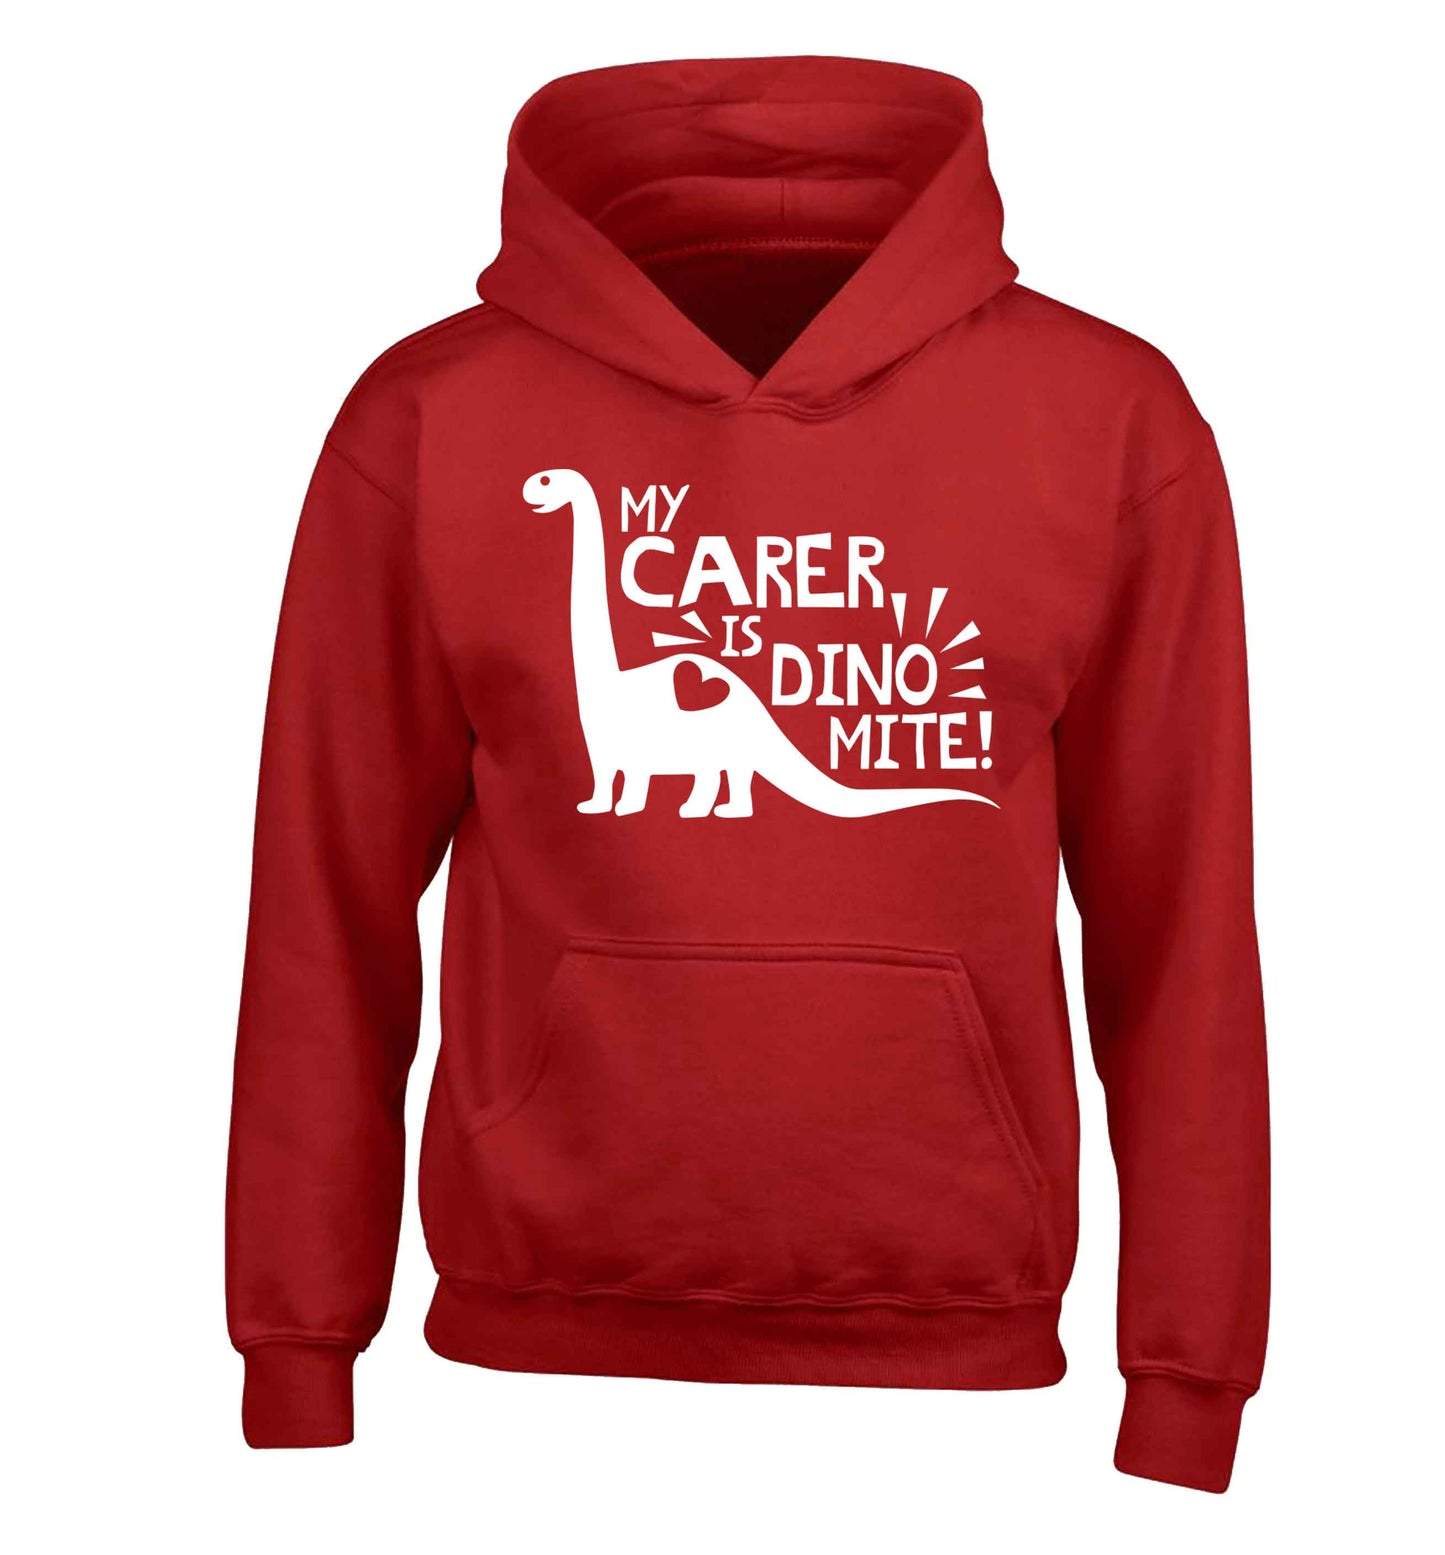 My carer is dinomite! children's red hoodie 12-13 Years